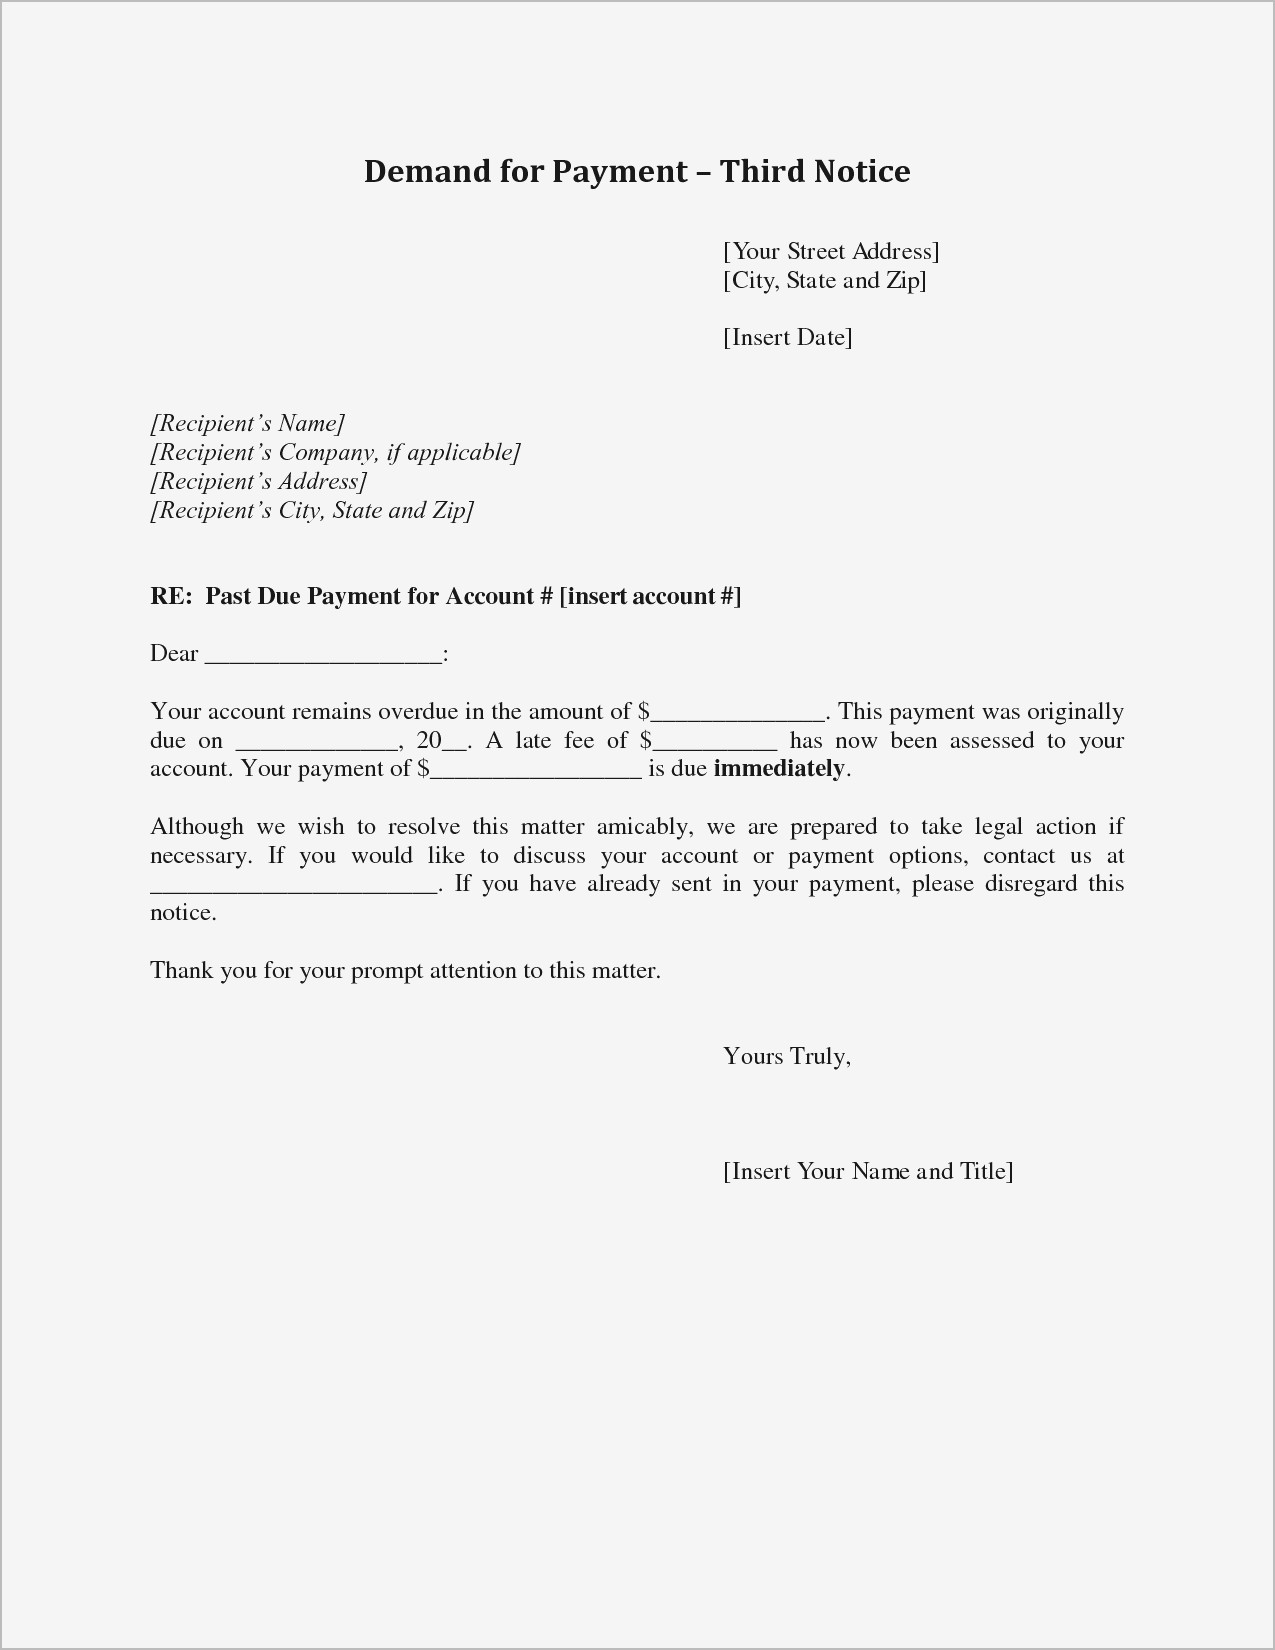 Final Notice before Legal Action Letter Template Uk - Legal Action Letter format Save Sample Demand Letter for Money Owed